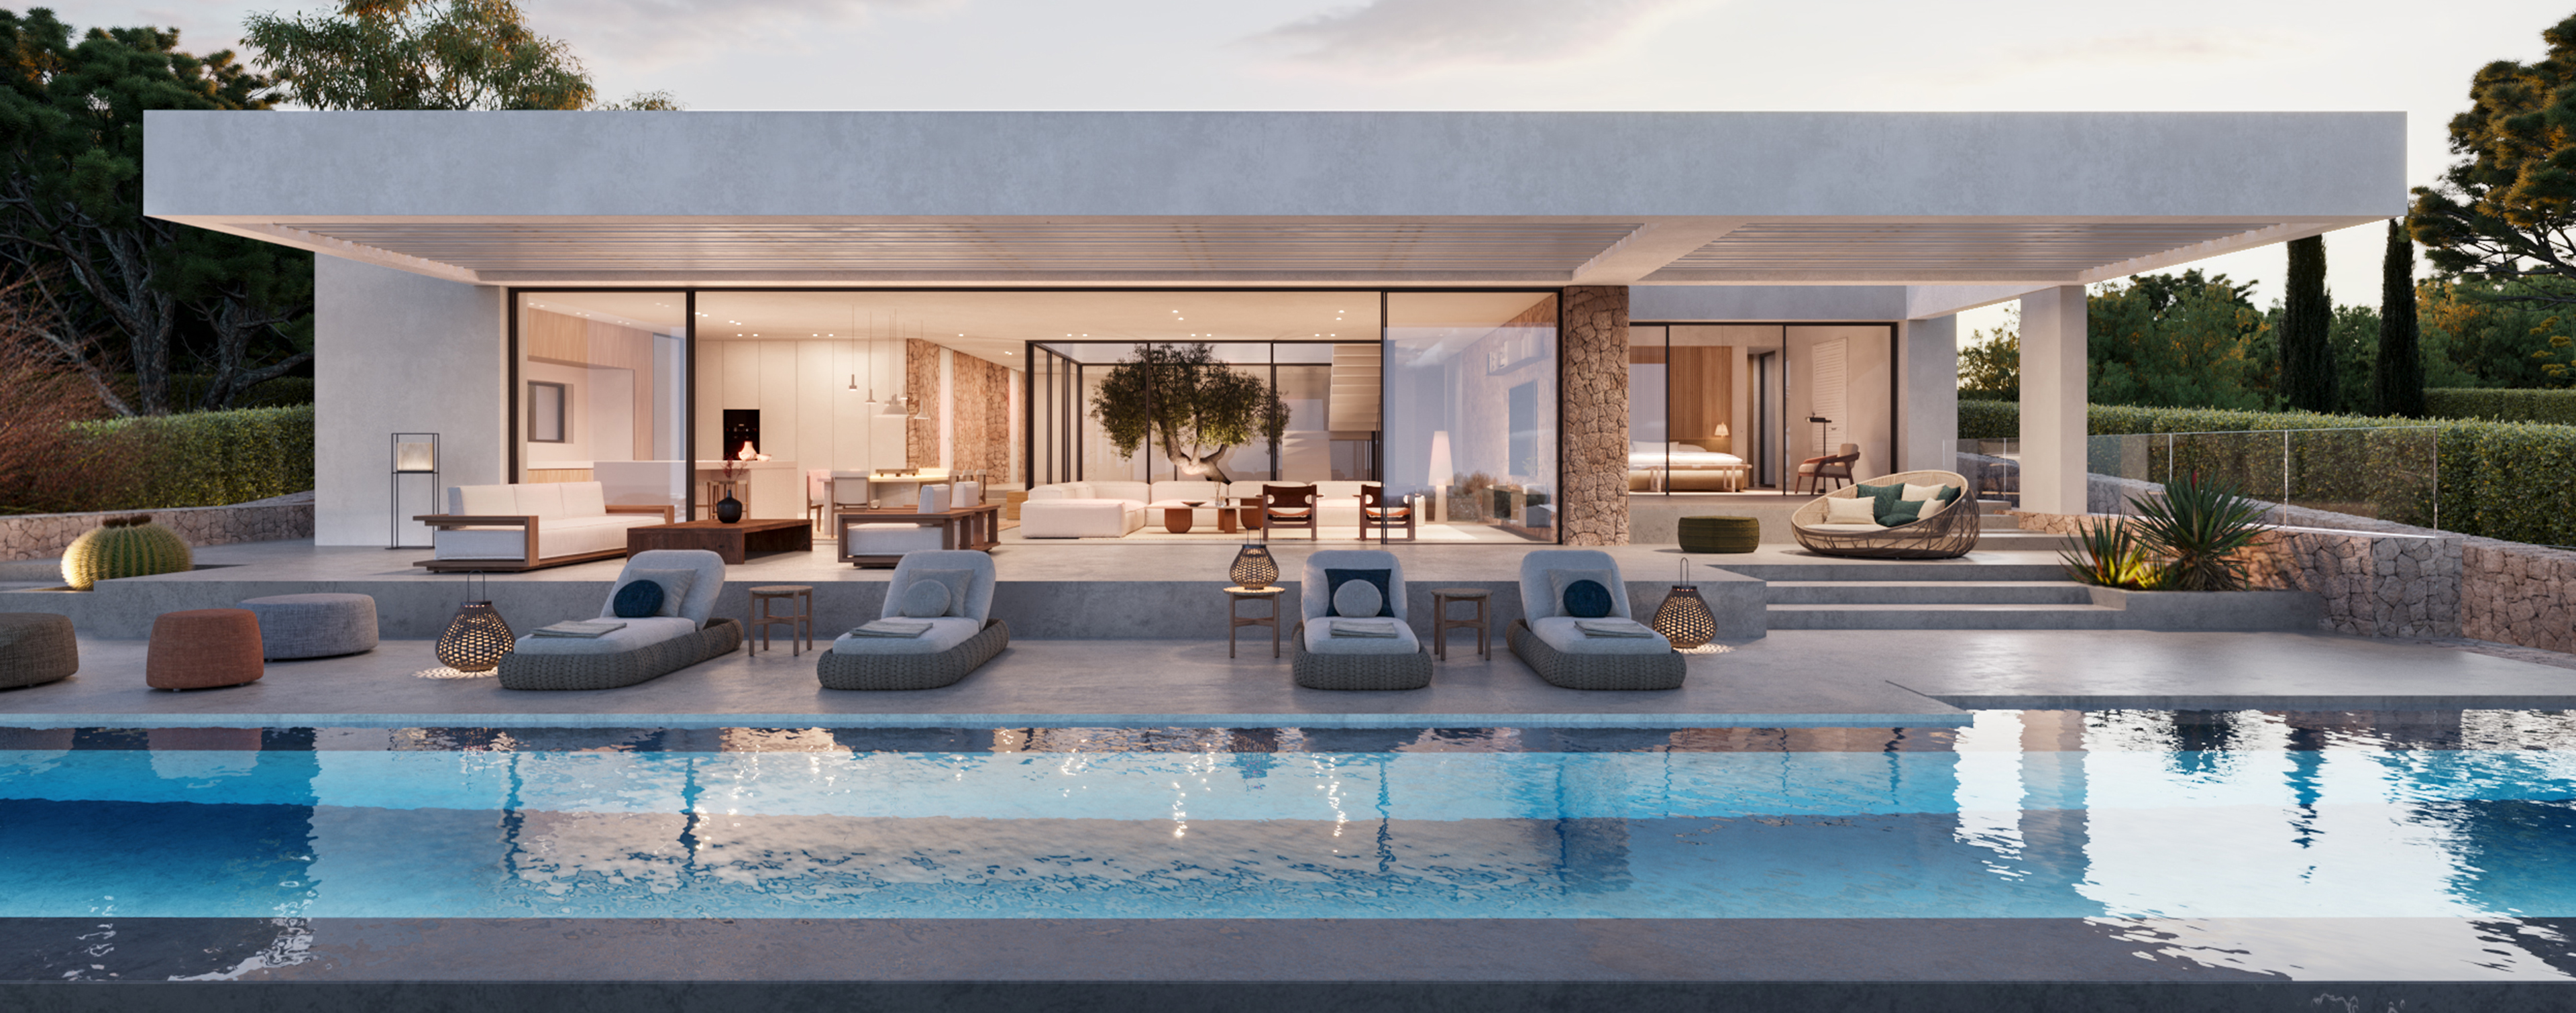 luv studio luxury architects menorca gambi house IMG 02 - LUV Studio - Arquitectura y diseño - Barcelona